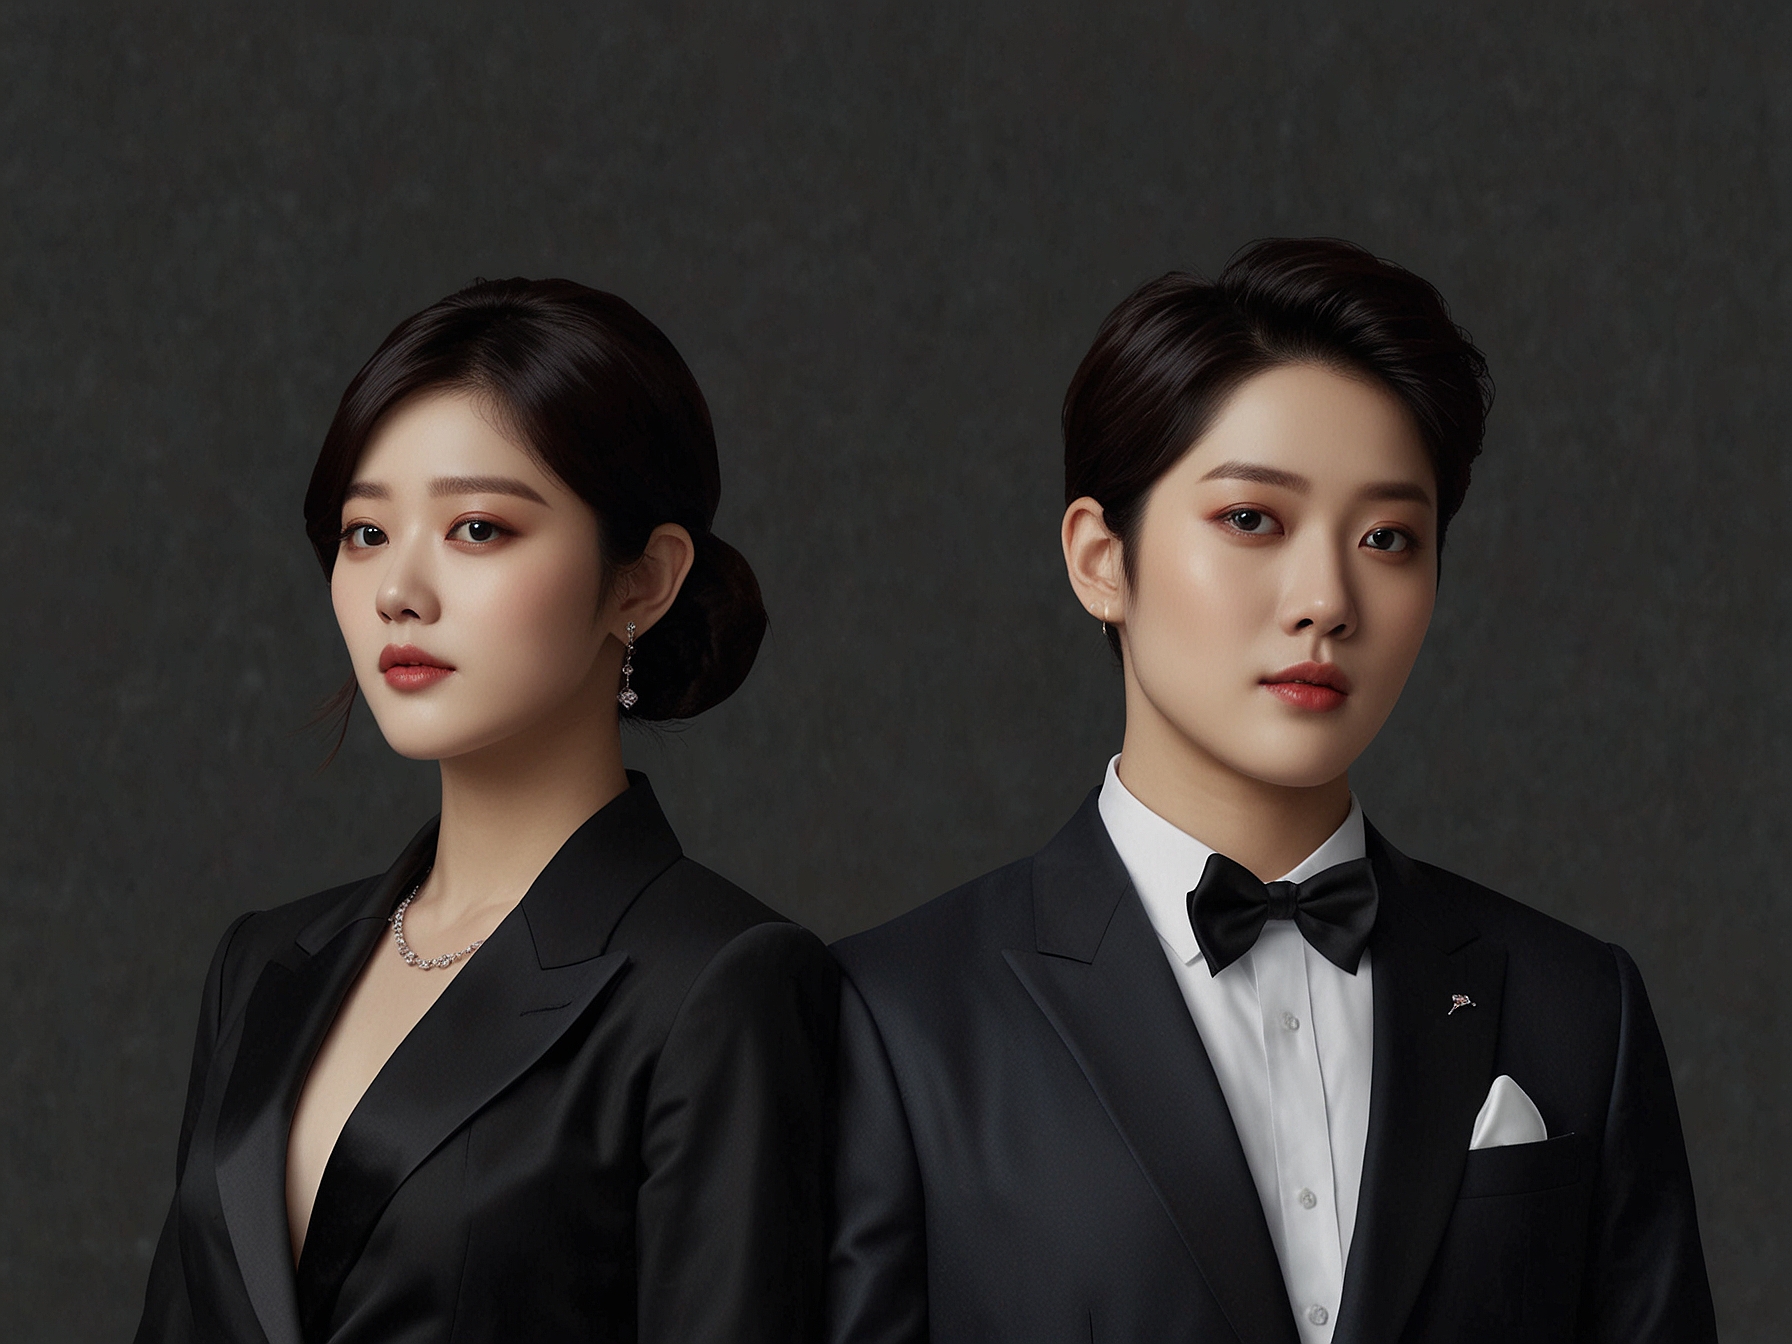 Jang Nara, Nam Ji Hyun, Kim Jun Han, and P.O. pose together in sleek black suits, exuding charm and sophistication as they make a grand entrance on 'Amazing Saturday.'